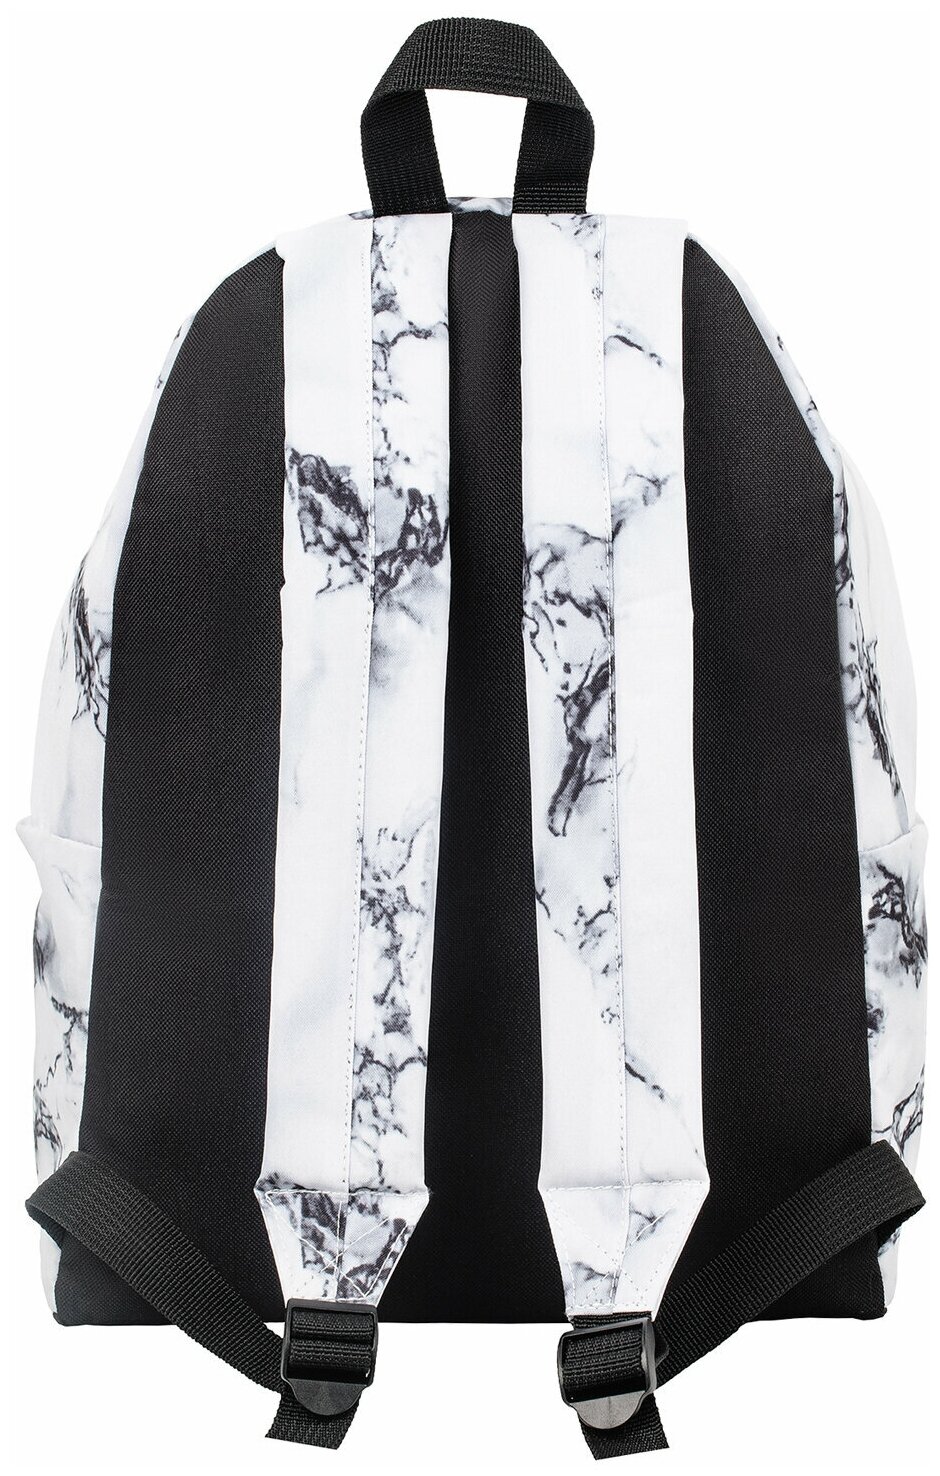 Рюкзак BRAUBERG сити-формат универсальный, White marble, бело-черный, 41х32х14 см, 229886